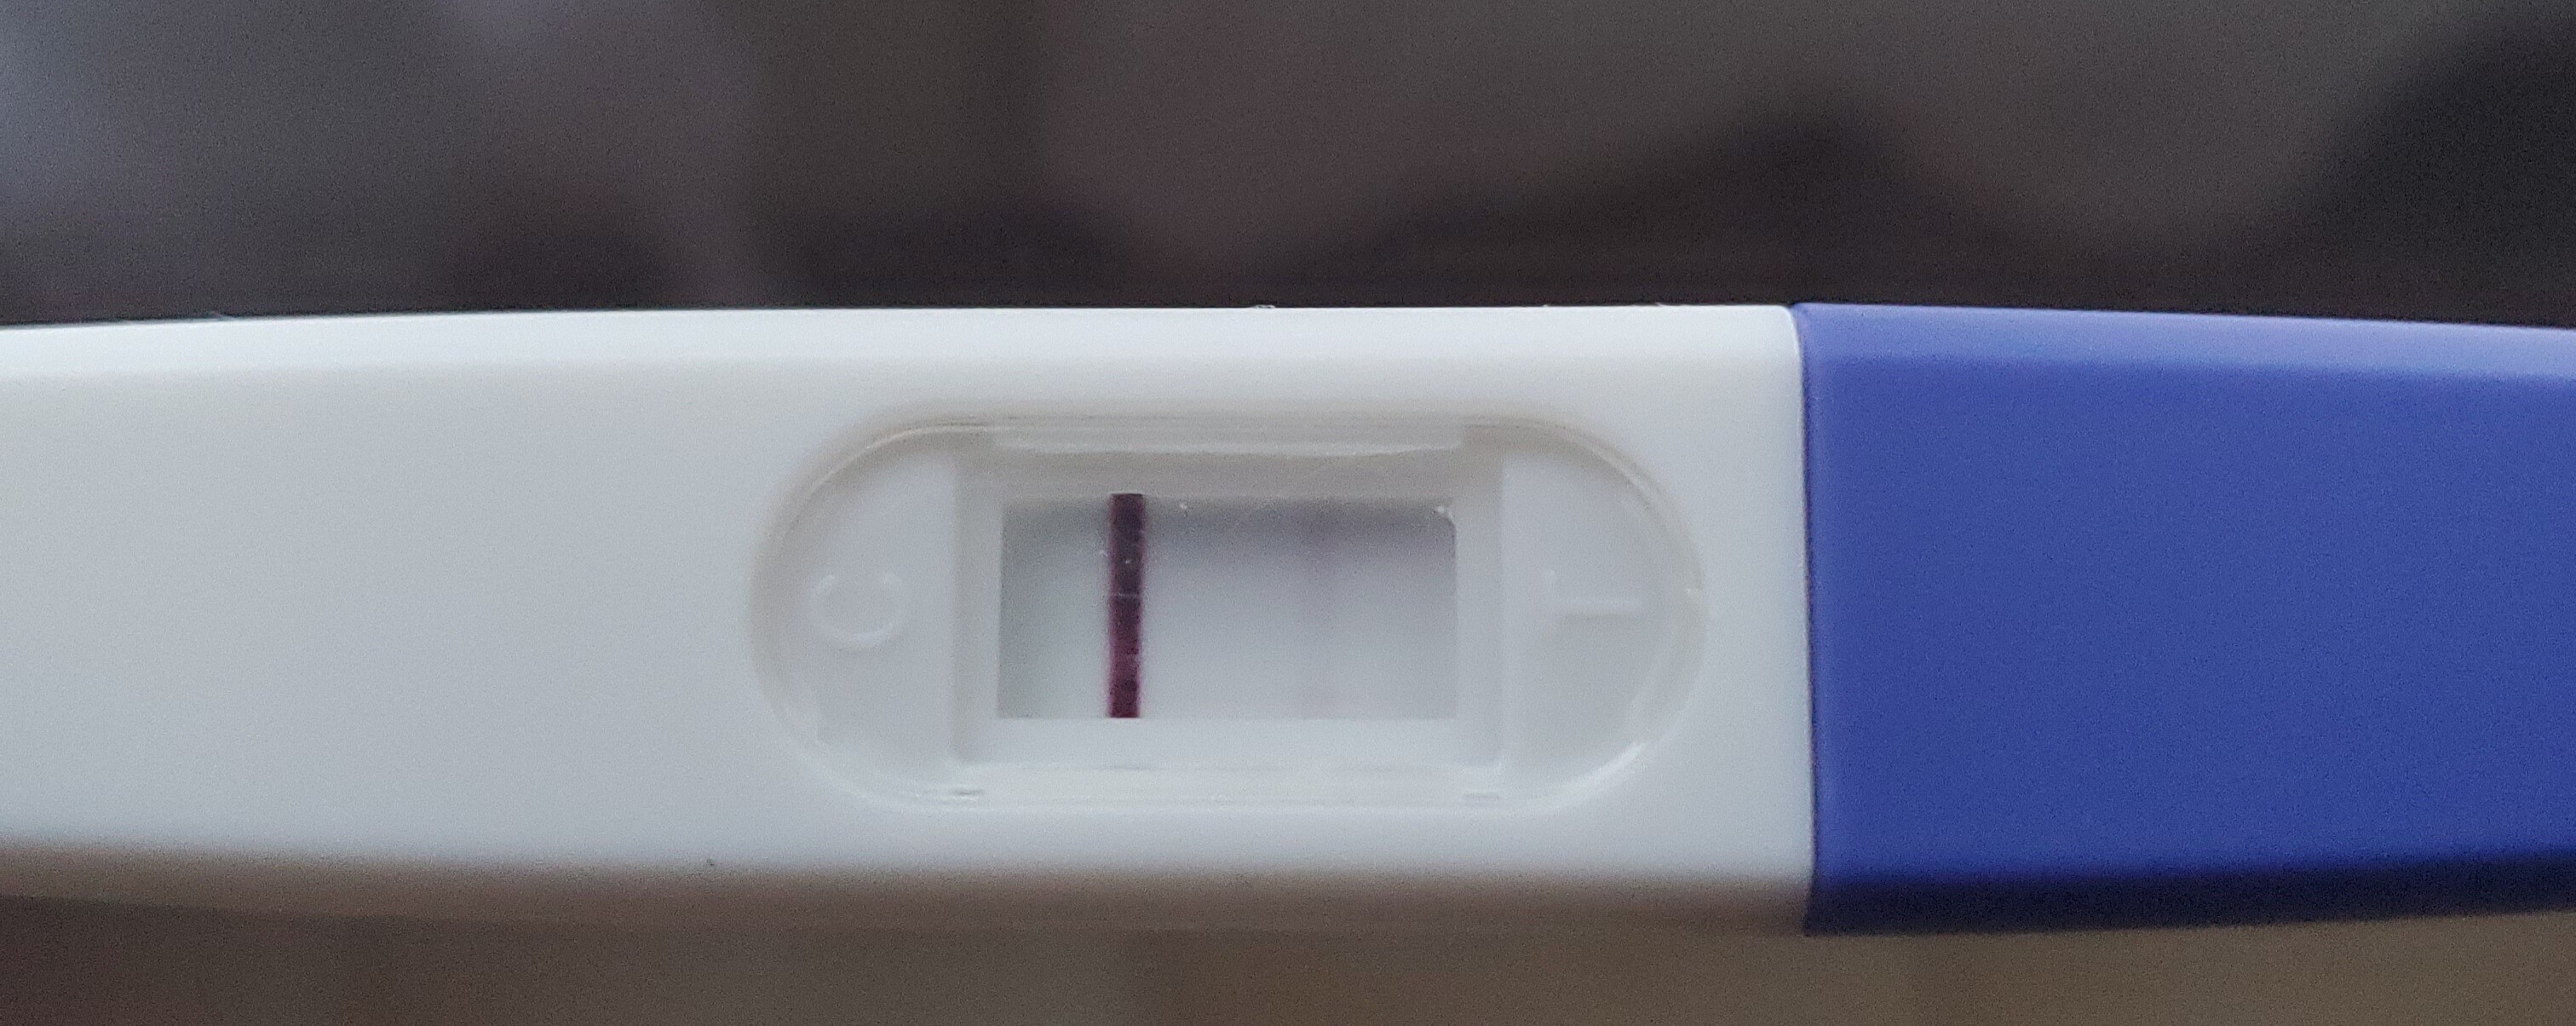 Test grossesse et barre évaporation - Tests et symptômes de ...